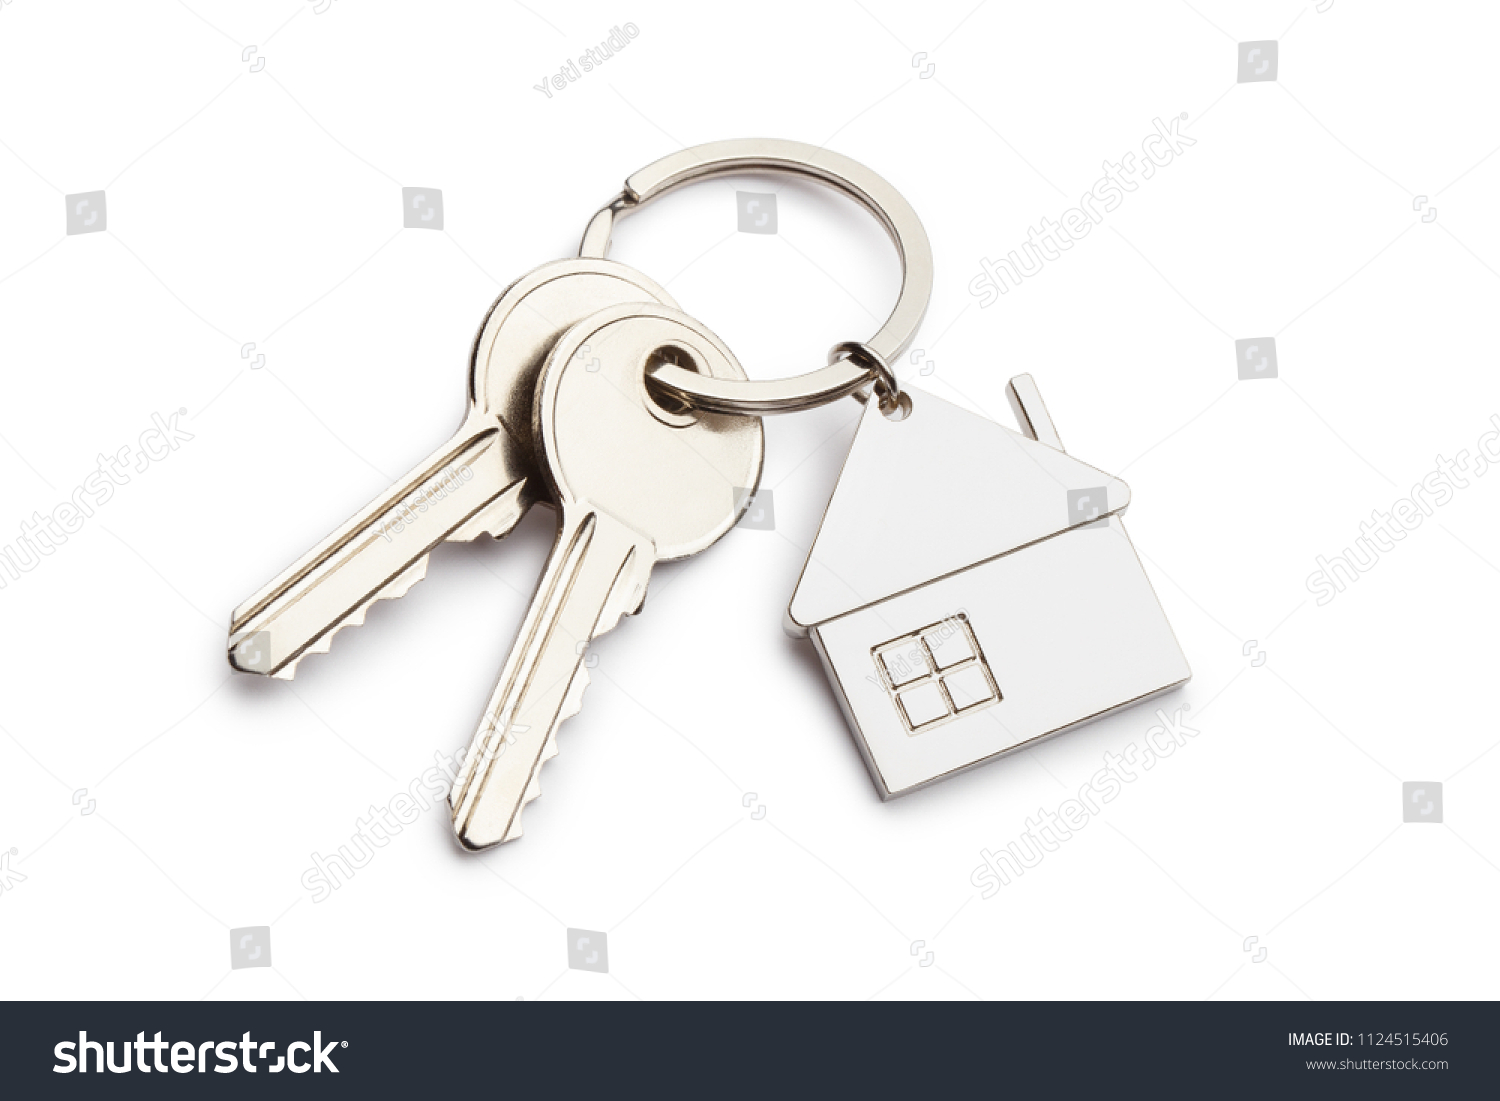 House keys with house shaped keychain, isolated on white background #1124515406